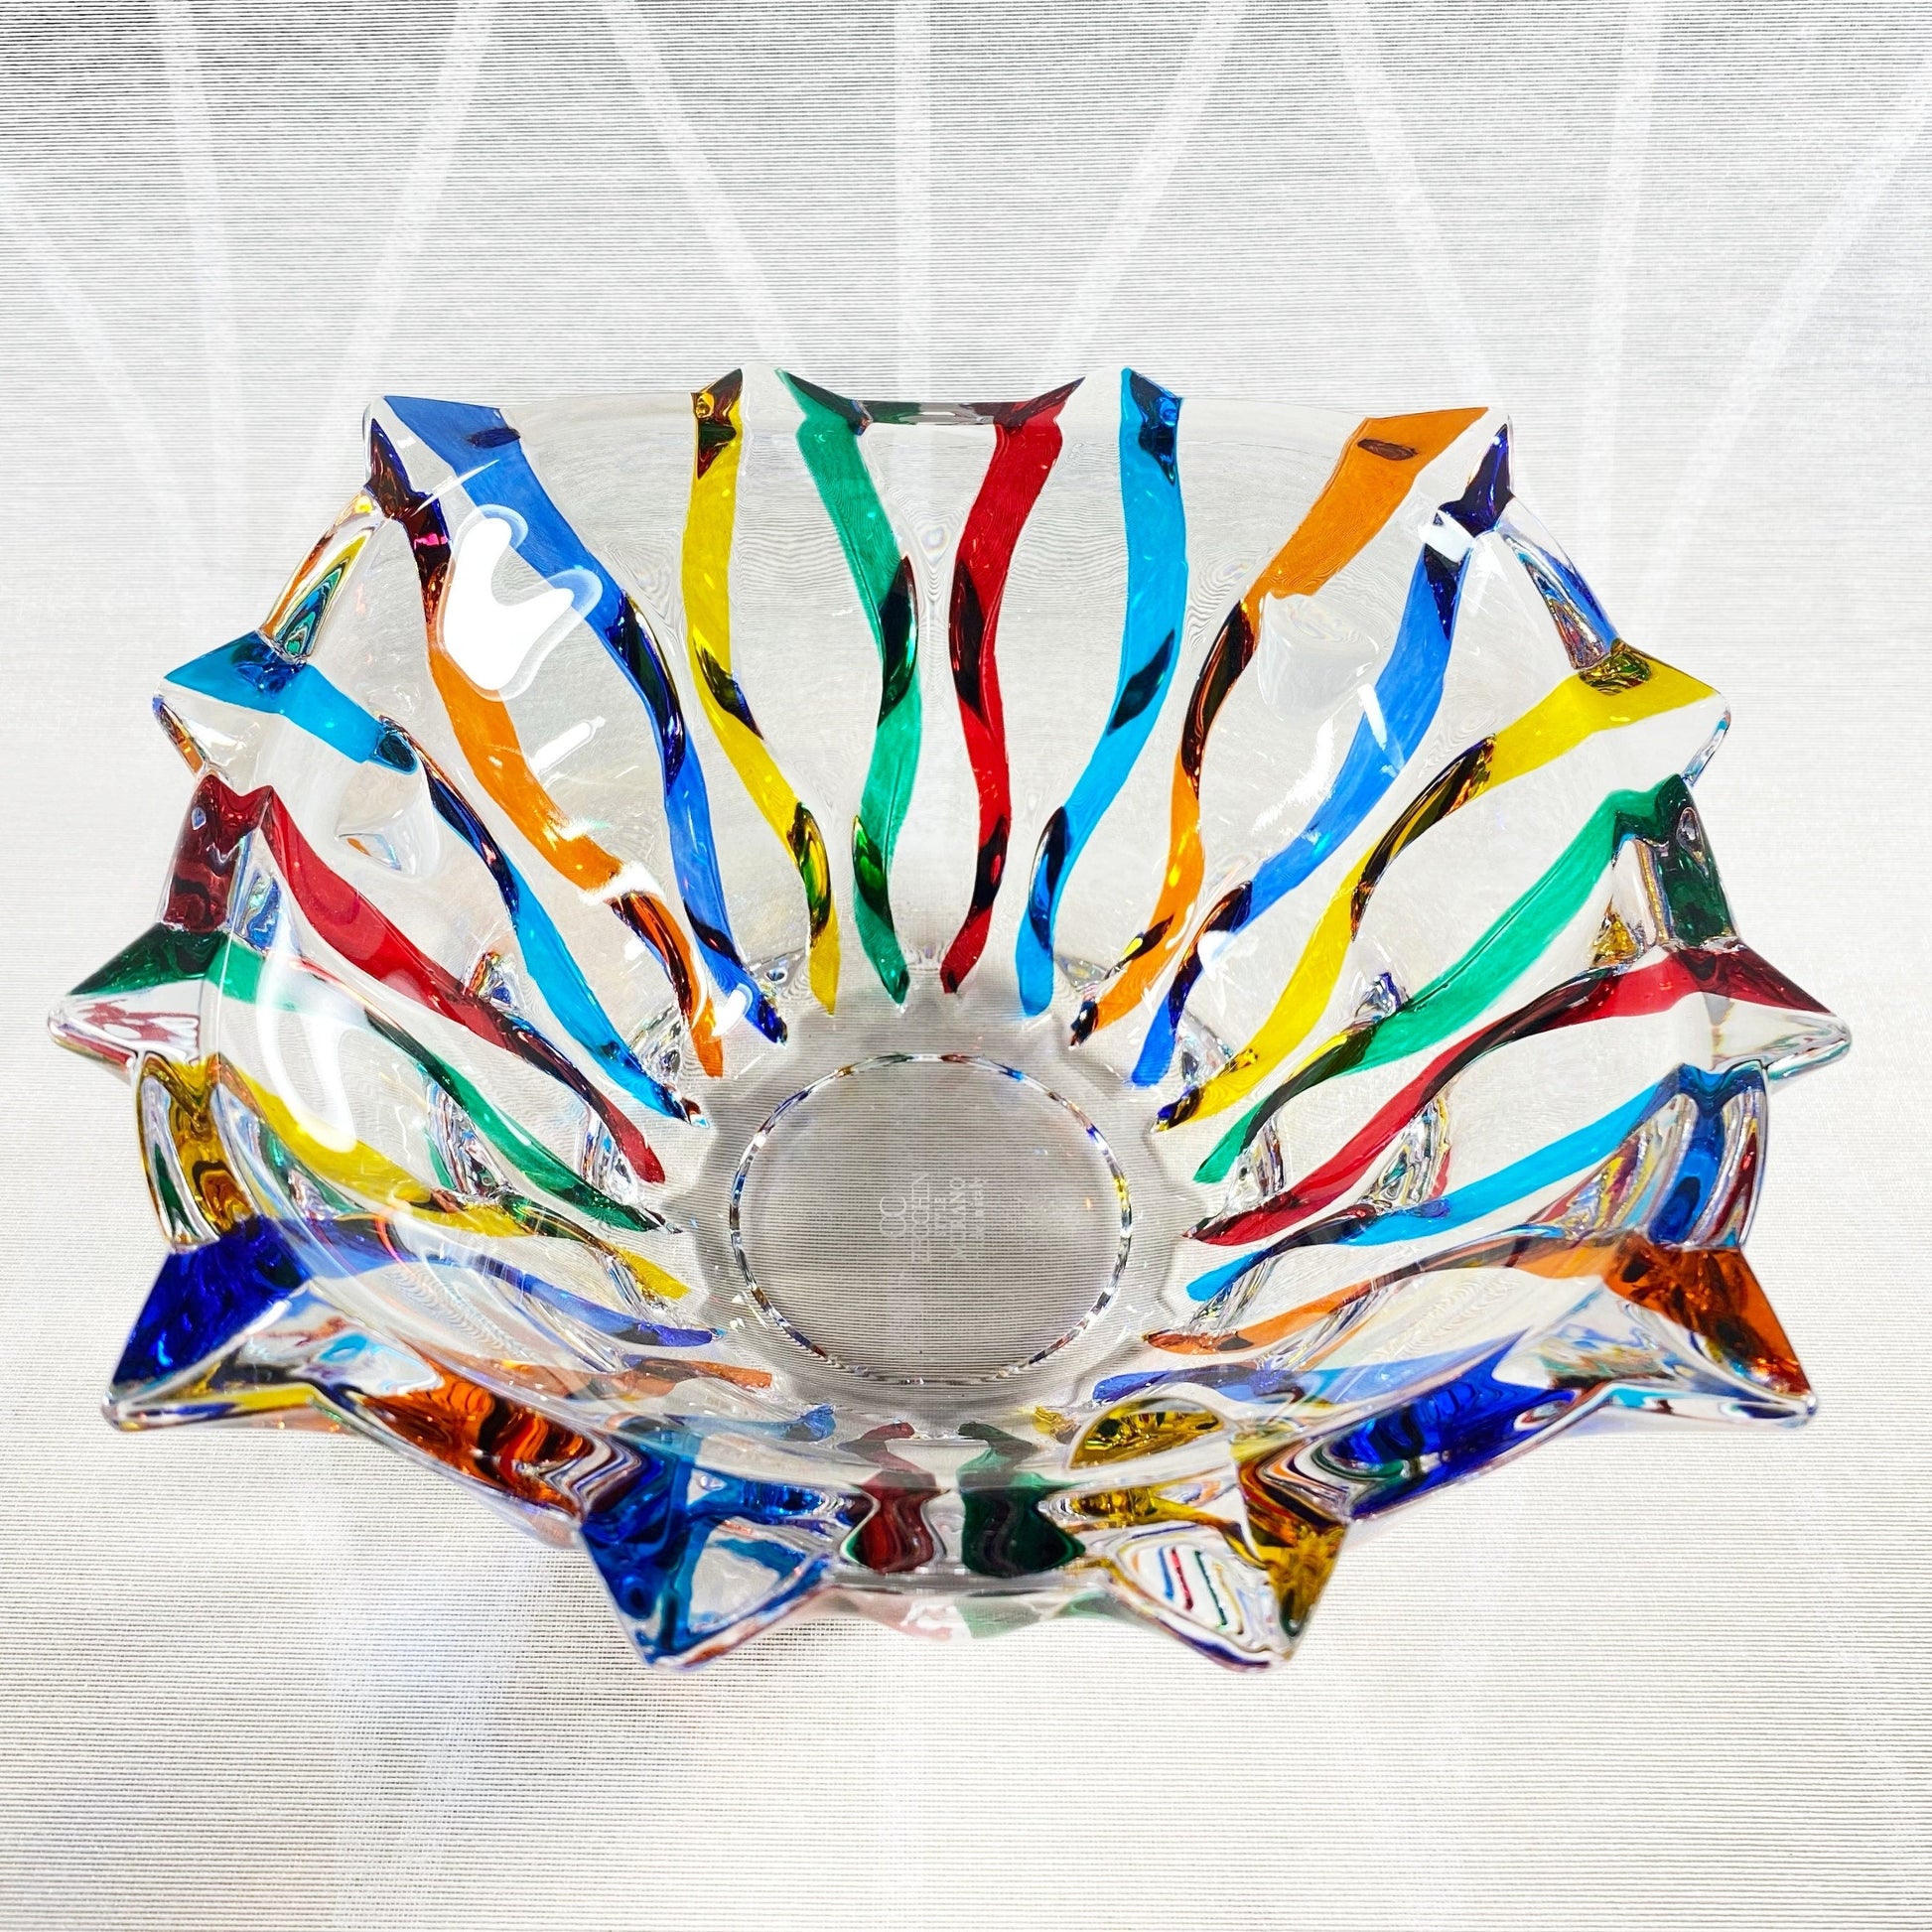 Venetian Glass Ribbon Dish - Handmade in Italy, Colorful Murano Glass Bowl